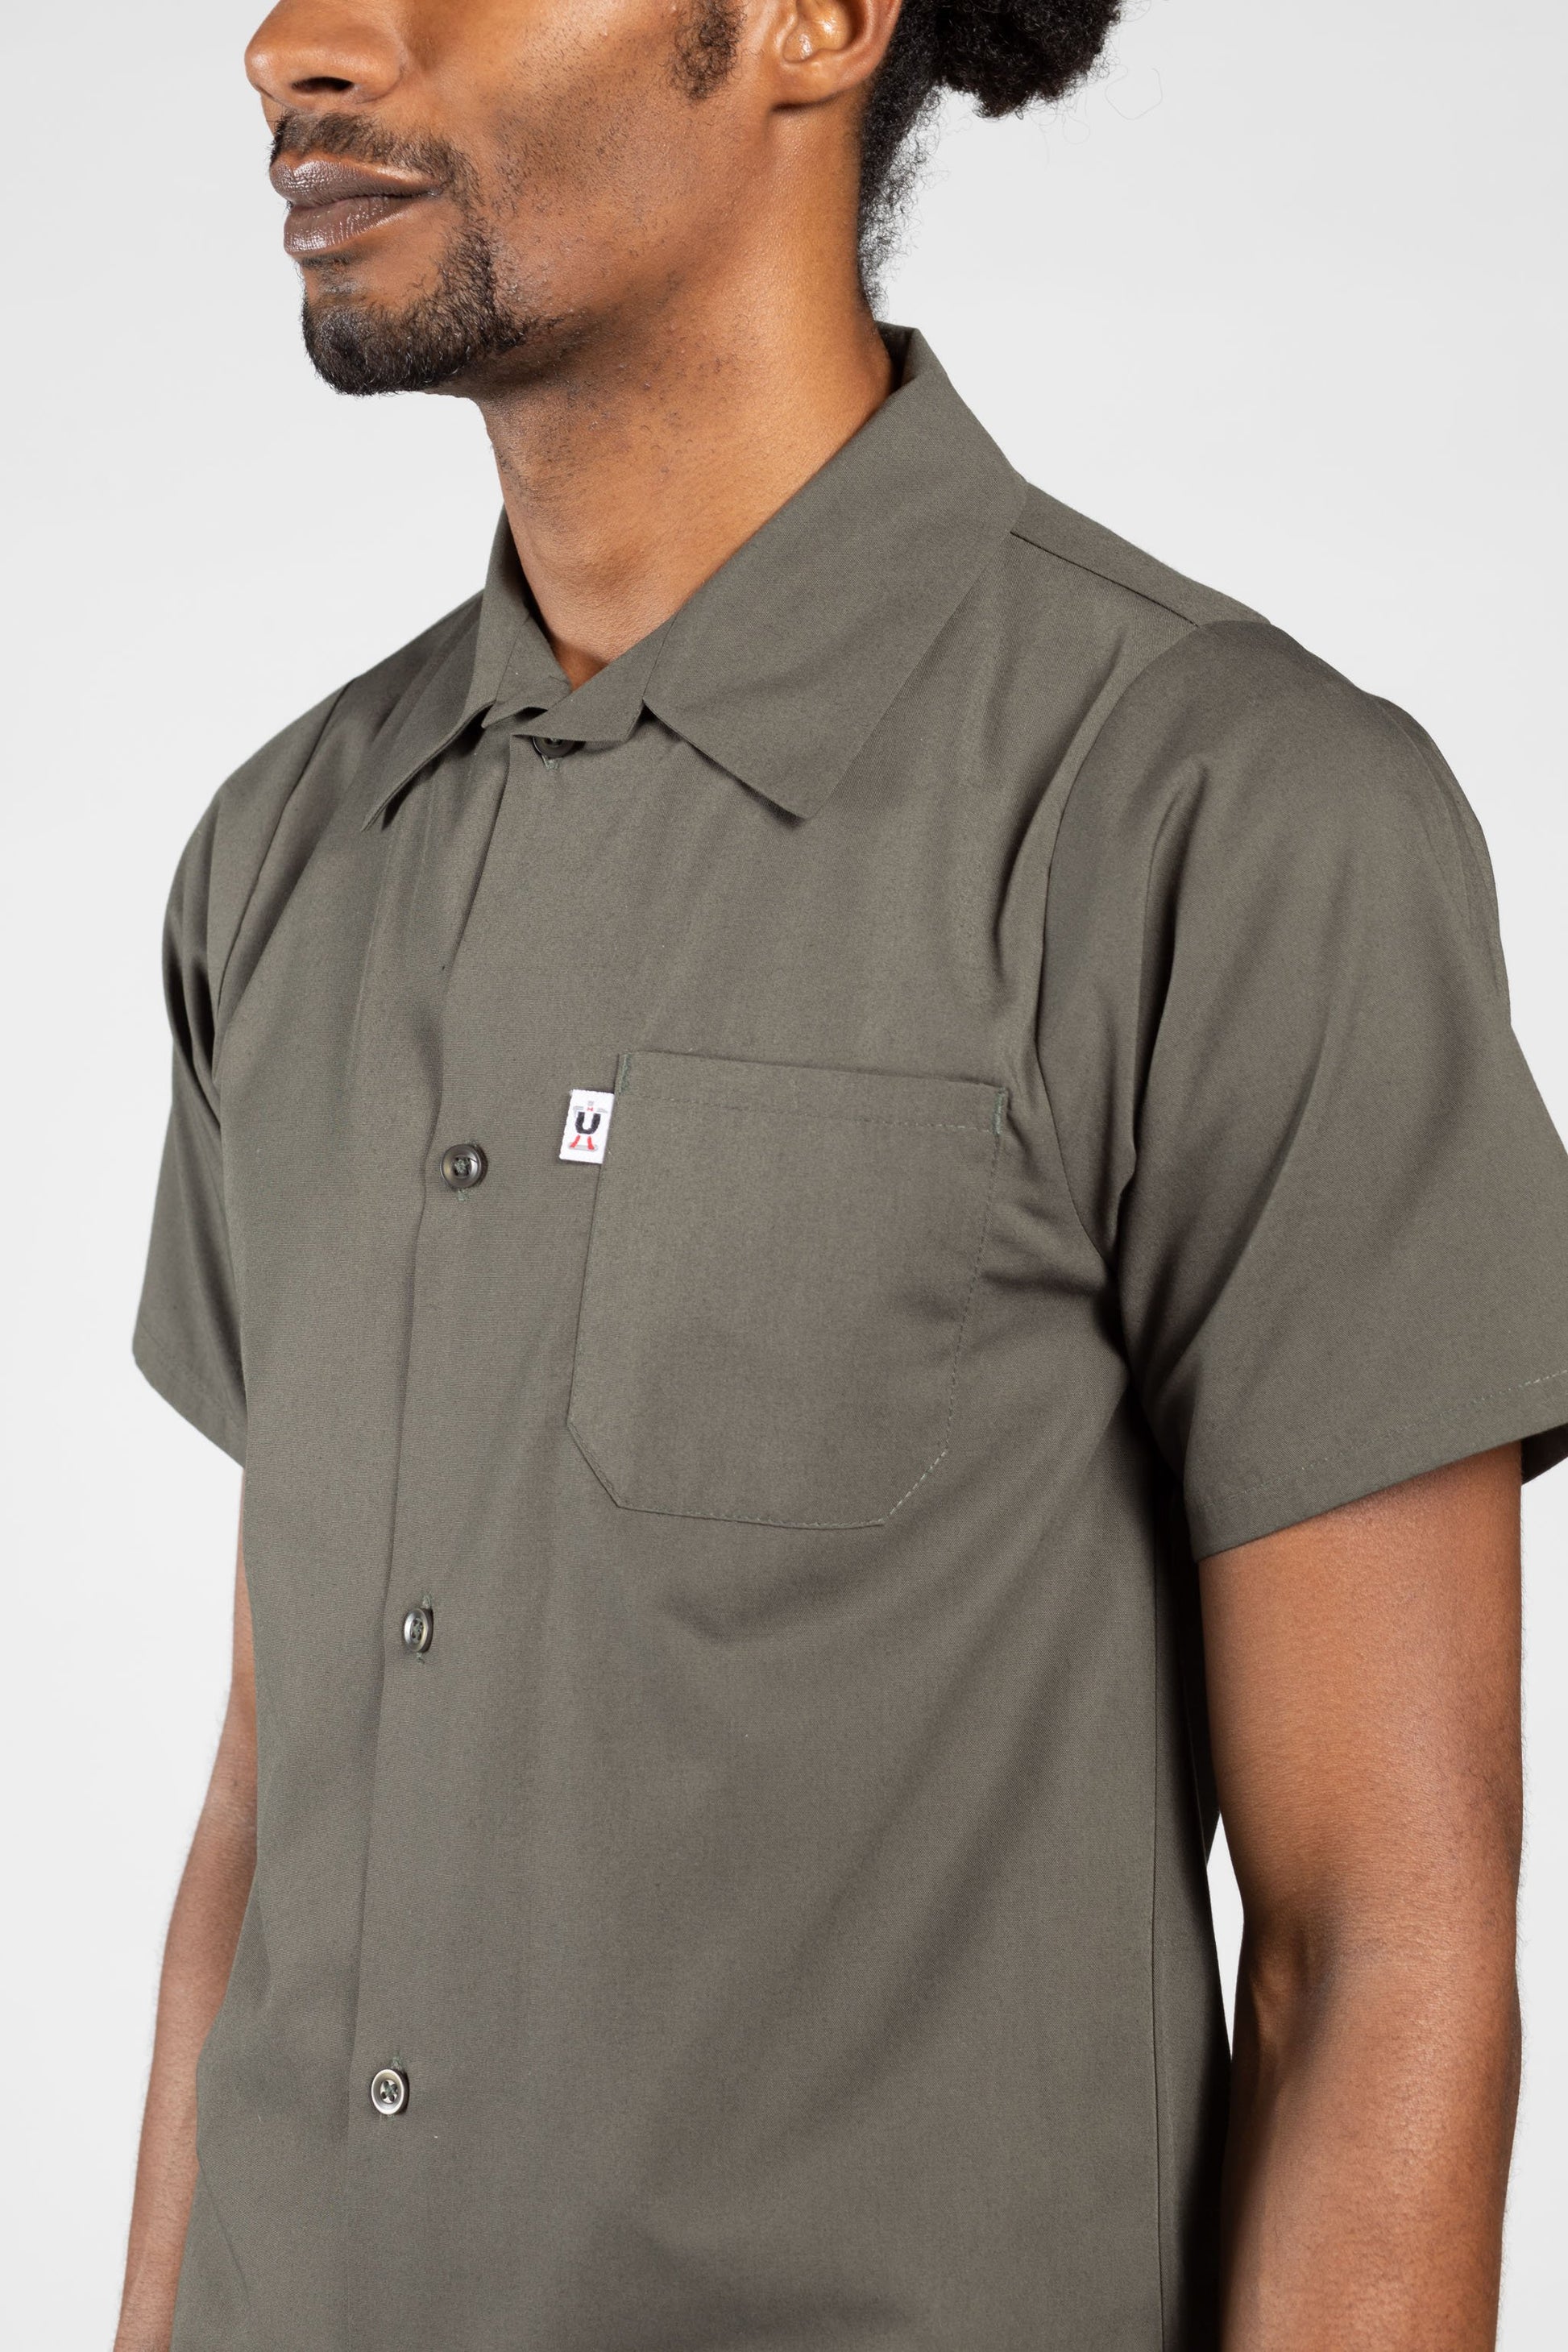  Gerry Men's Short Sleeve Quick Dry Tech Woven Shirt (Light Grey  Plaid, Medium) : Clothing, Shoes & Jewelry